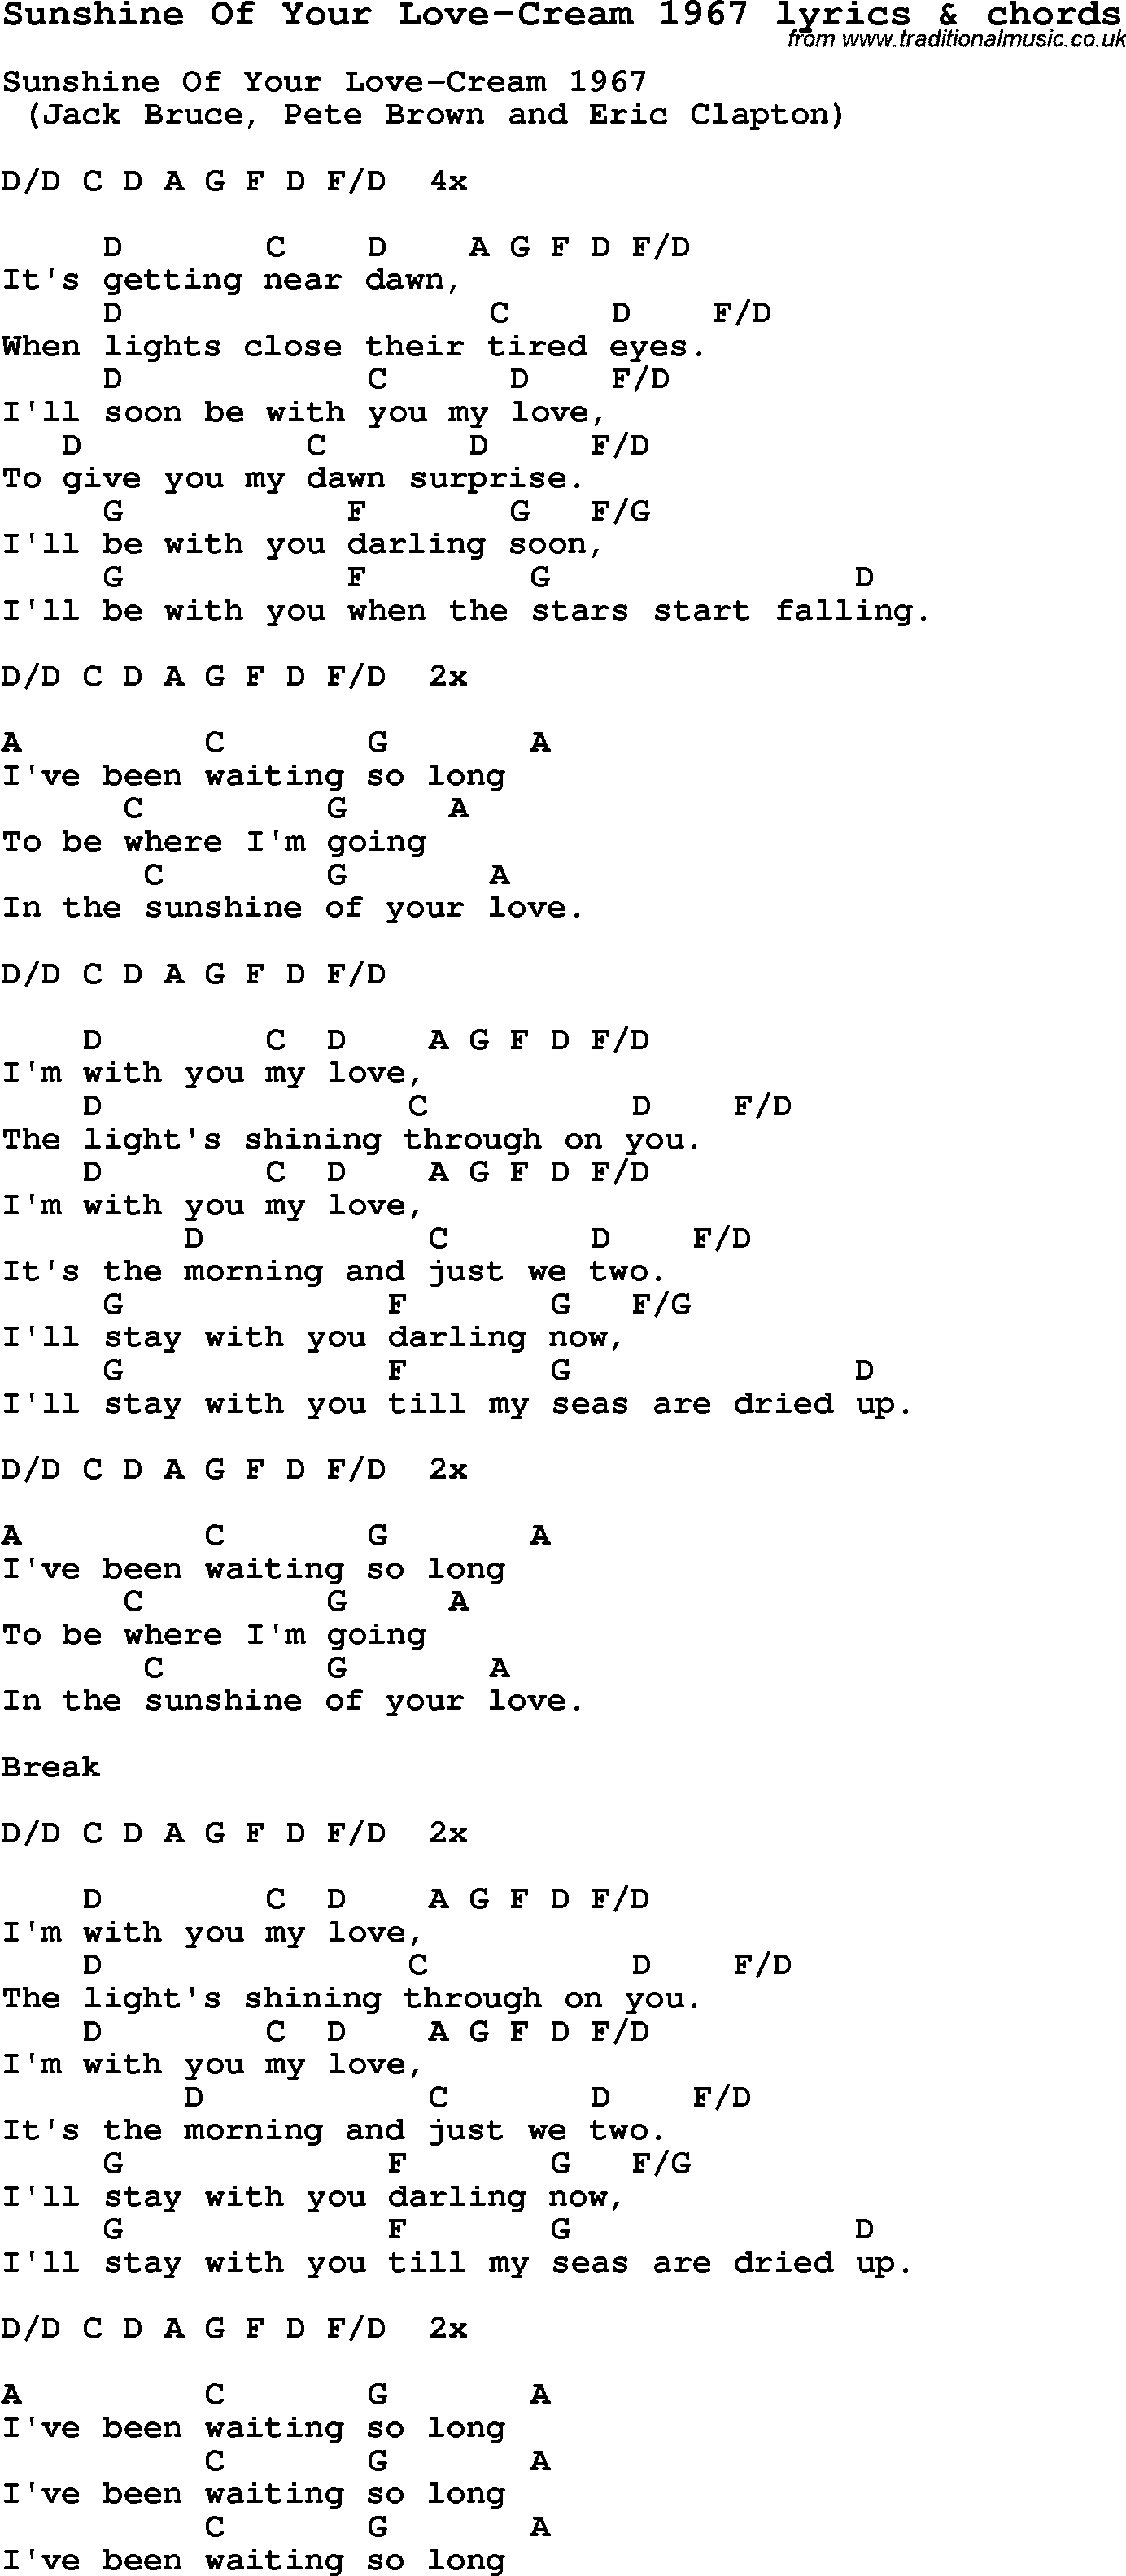 Love Song Lyrics for: Sunshine Of Your Love-Cream 1967 with chords for Ukulele, Guitar Banjo etc.